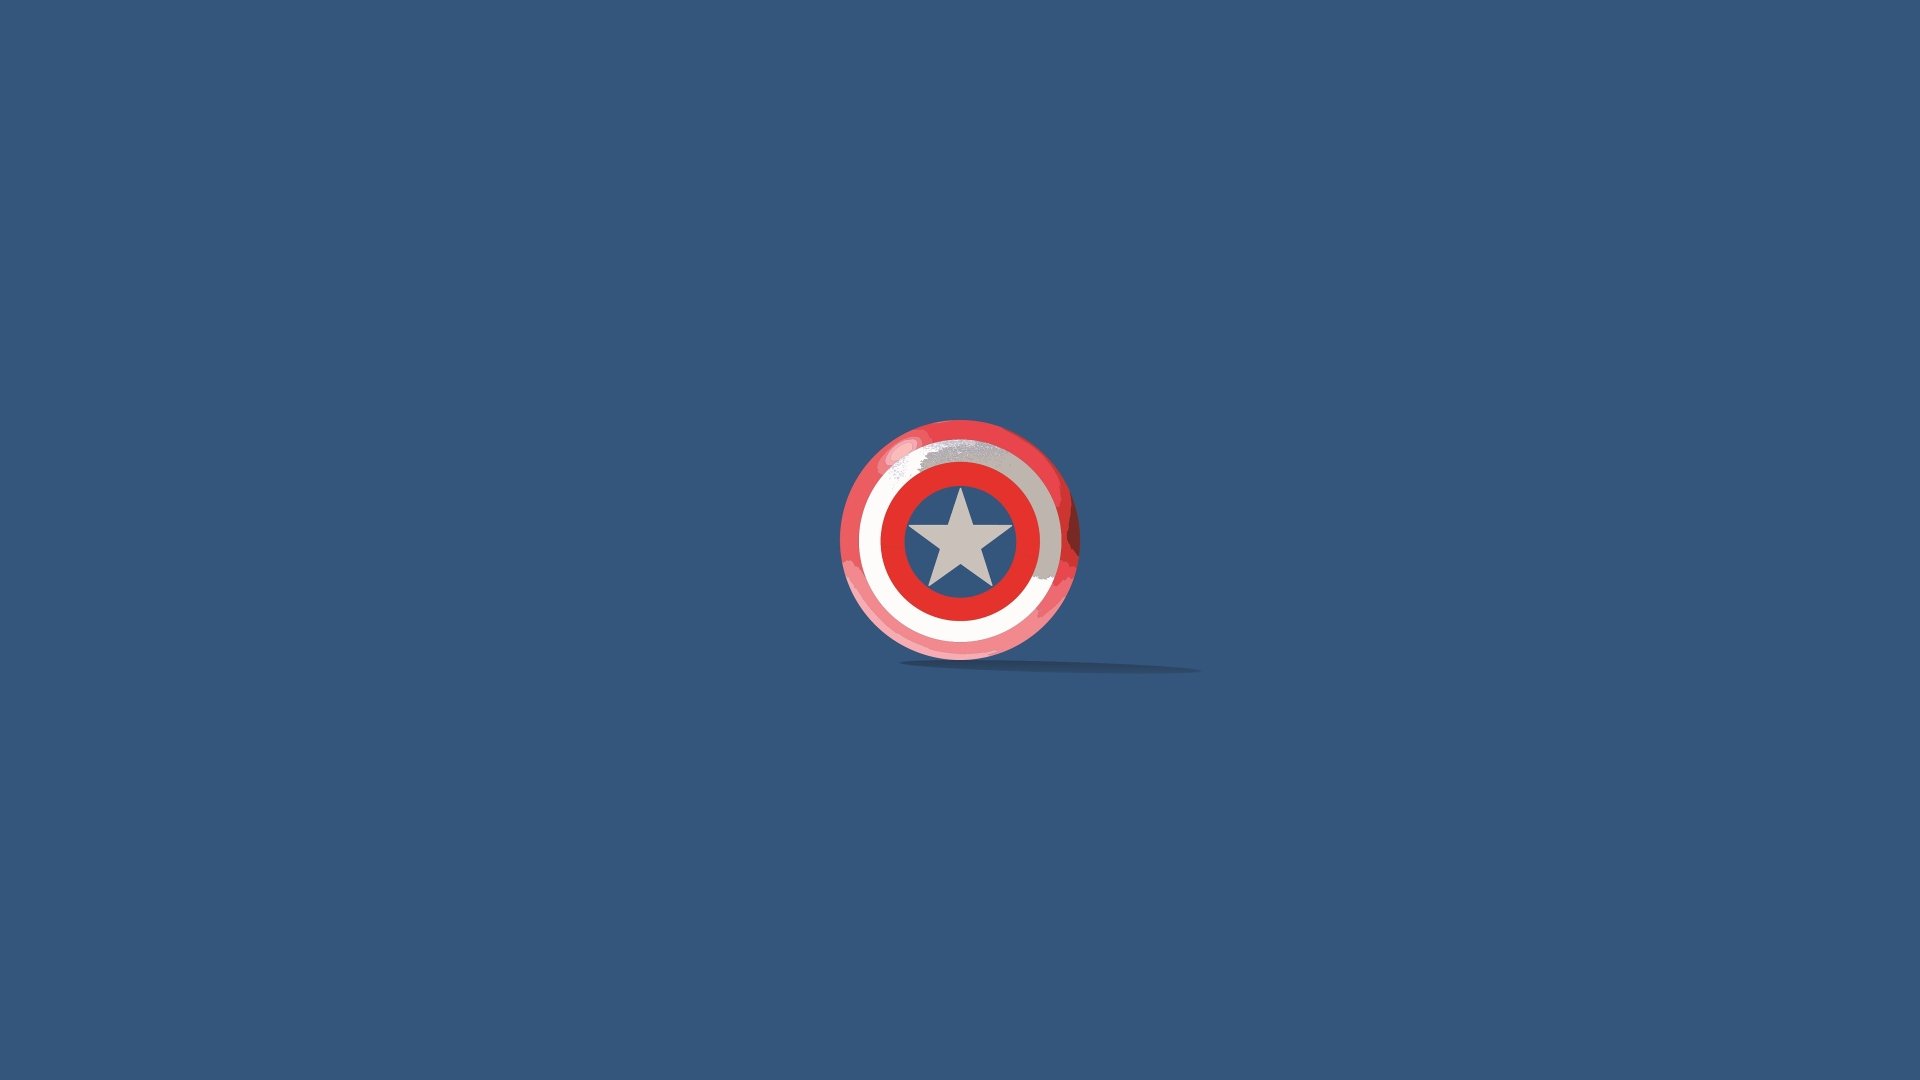 Captain America Shield 4k Ultra HD Wallpaper | Background Image | 3840x2160